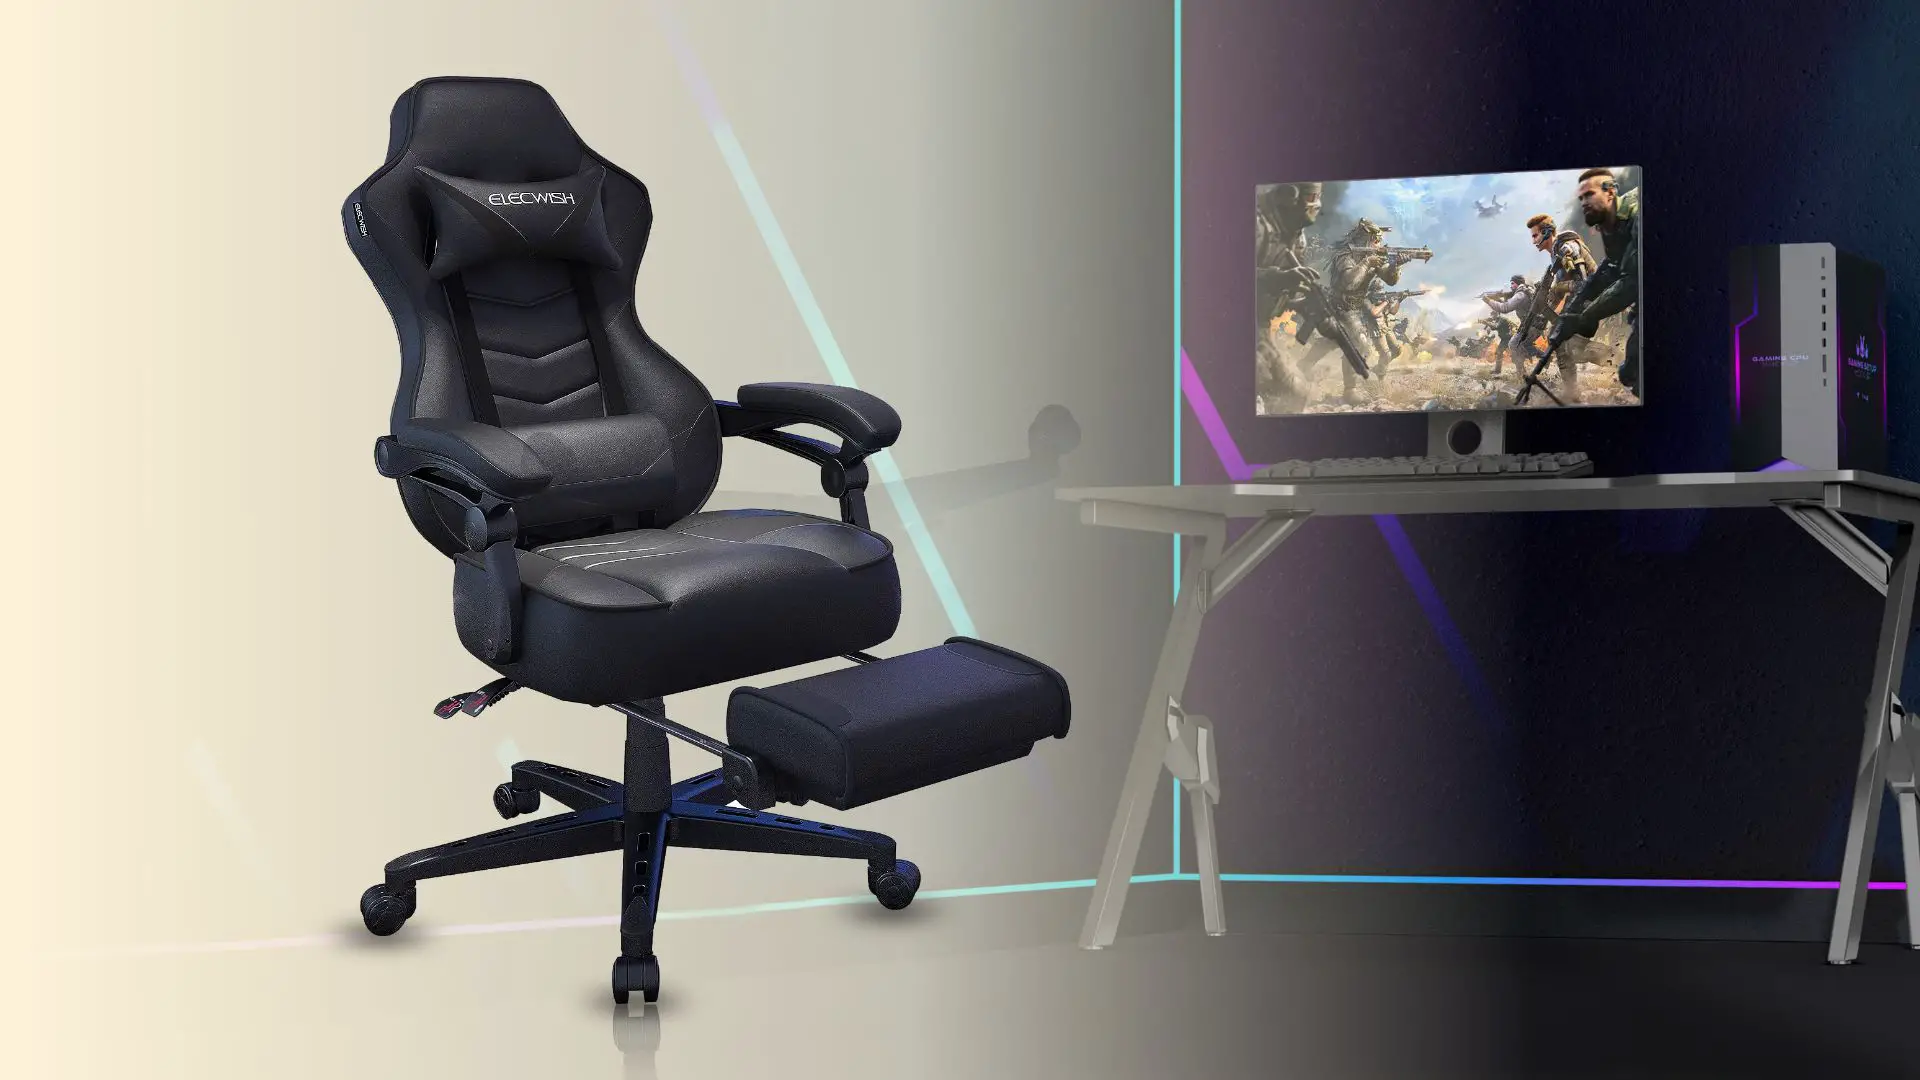 ELECWISH Gaming Chair 